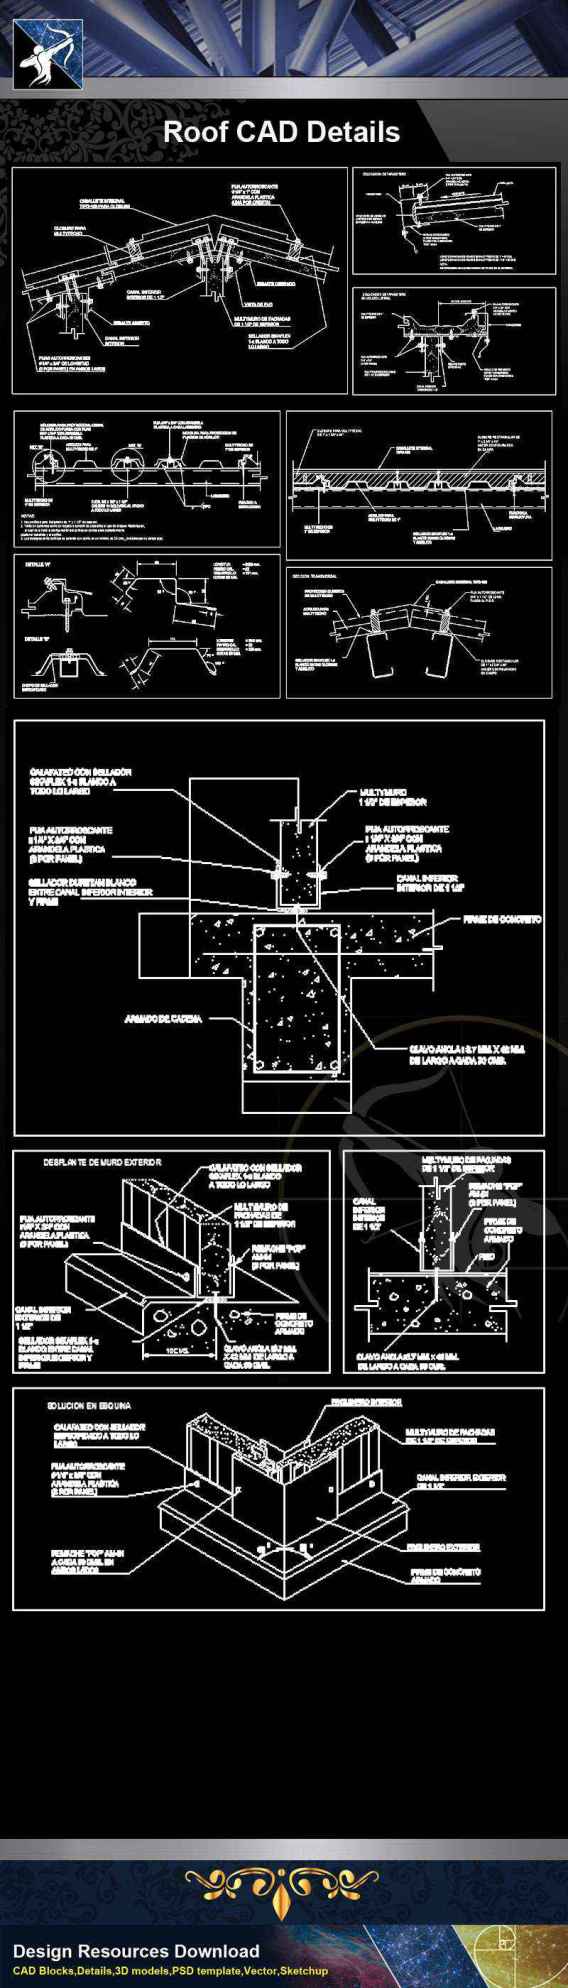 【Architecture CAD Details Collections】Roof CAD Details V.1